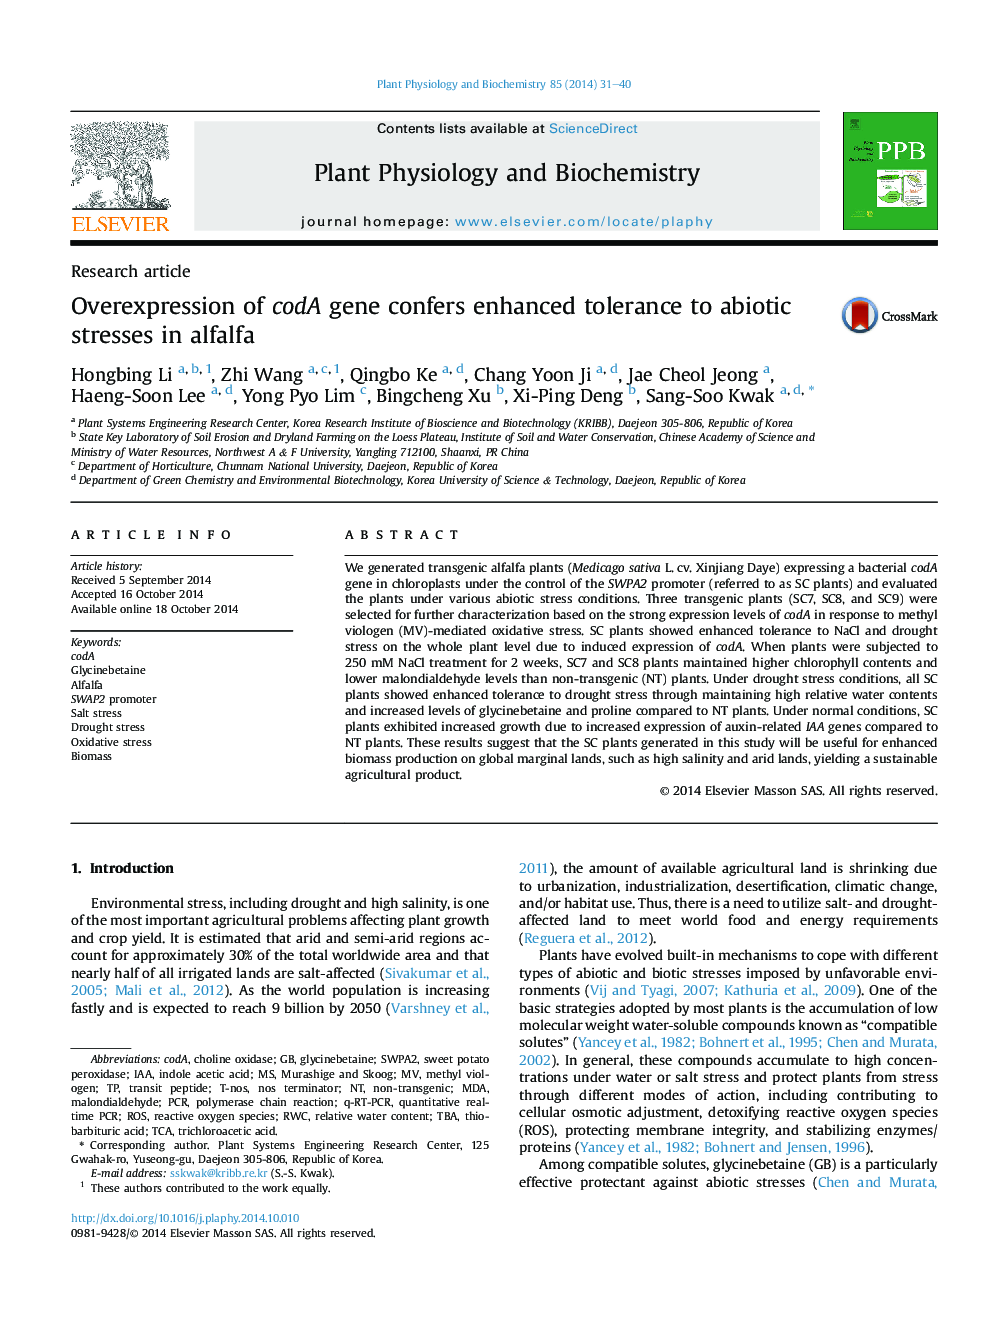 Overexpression of codA gene confers enhanced tolerance to abiotic stresses in alfalfa